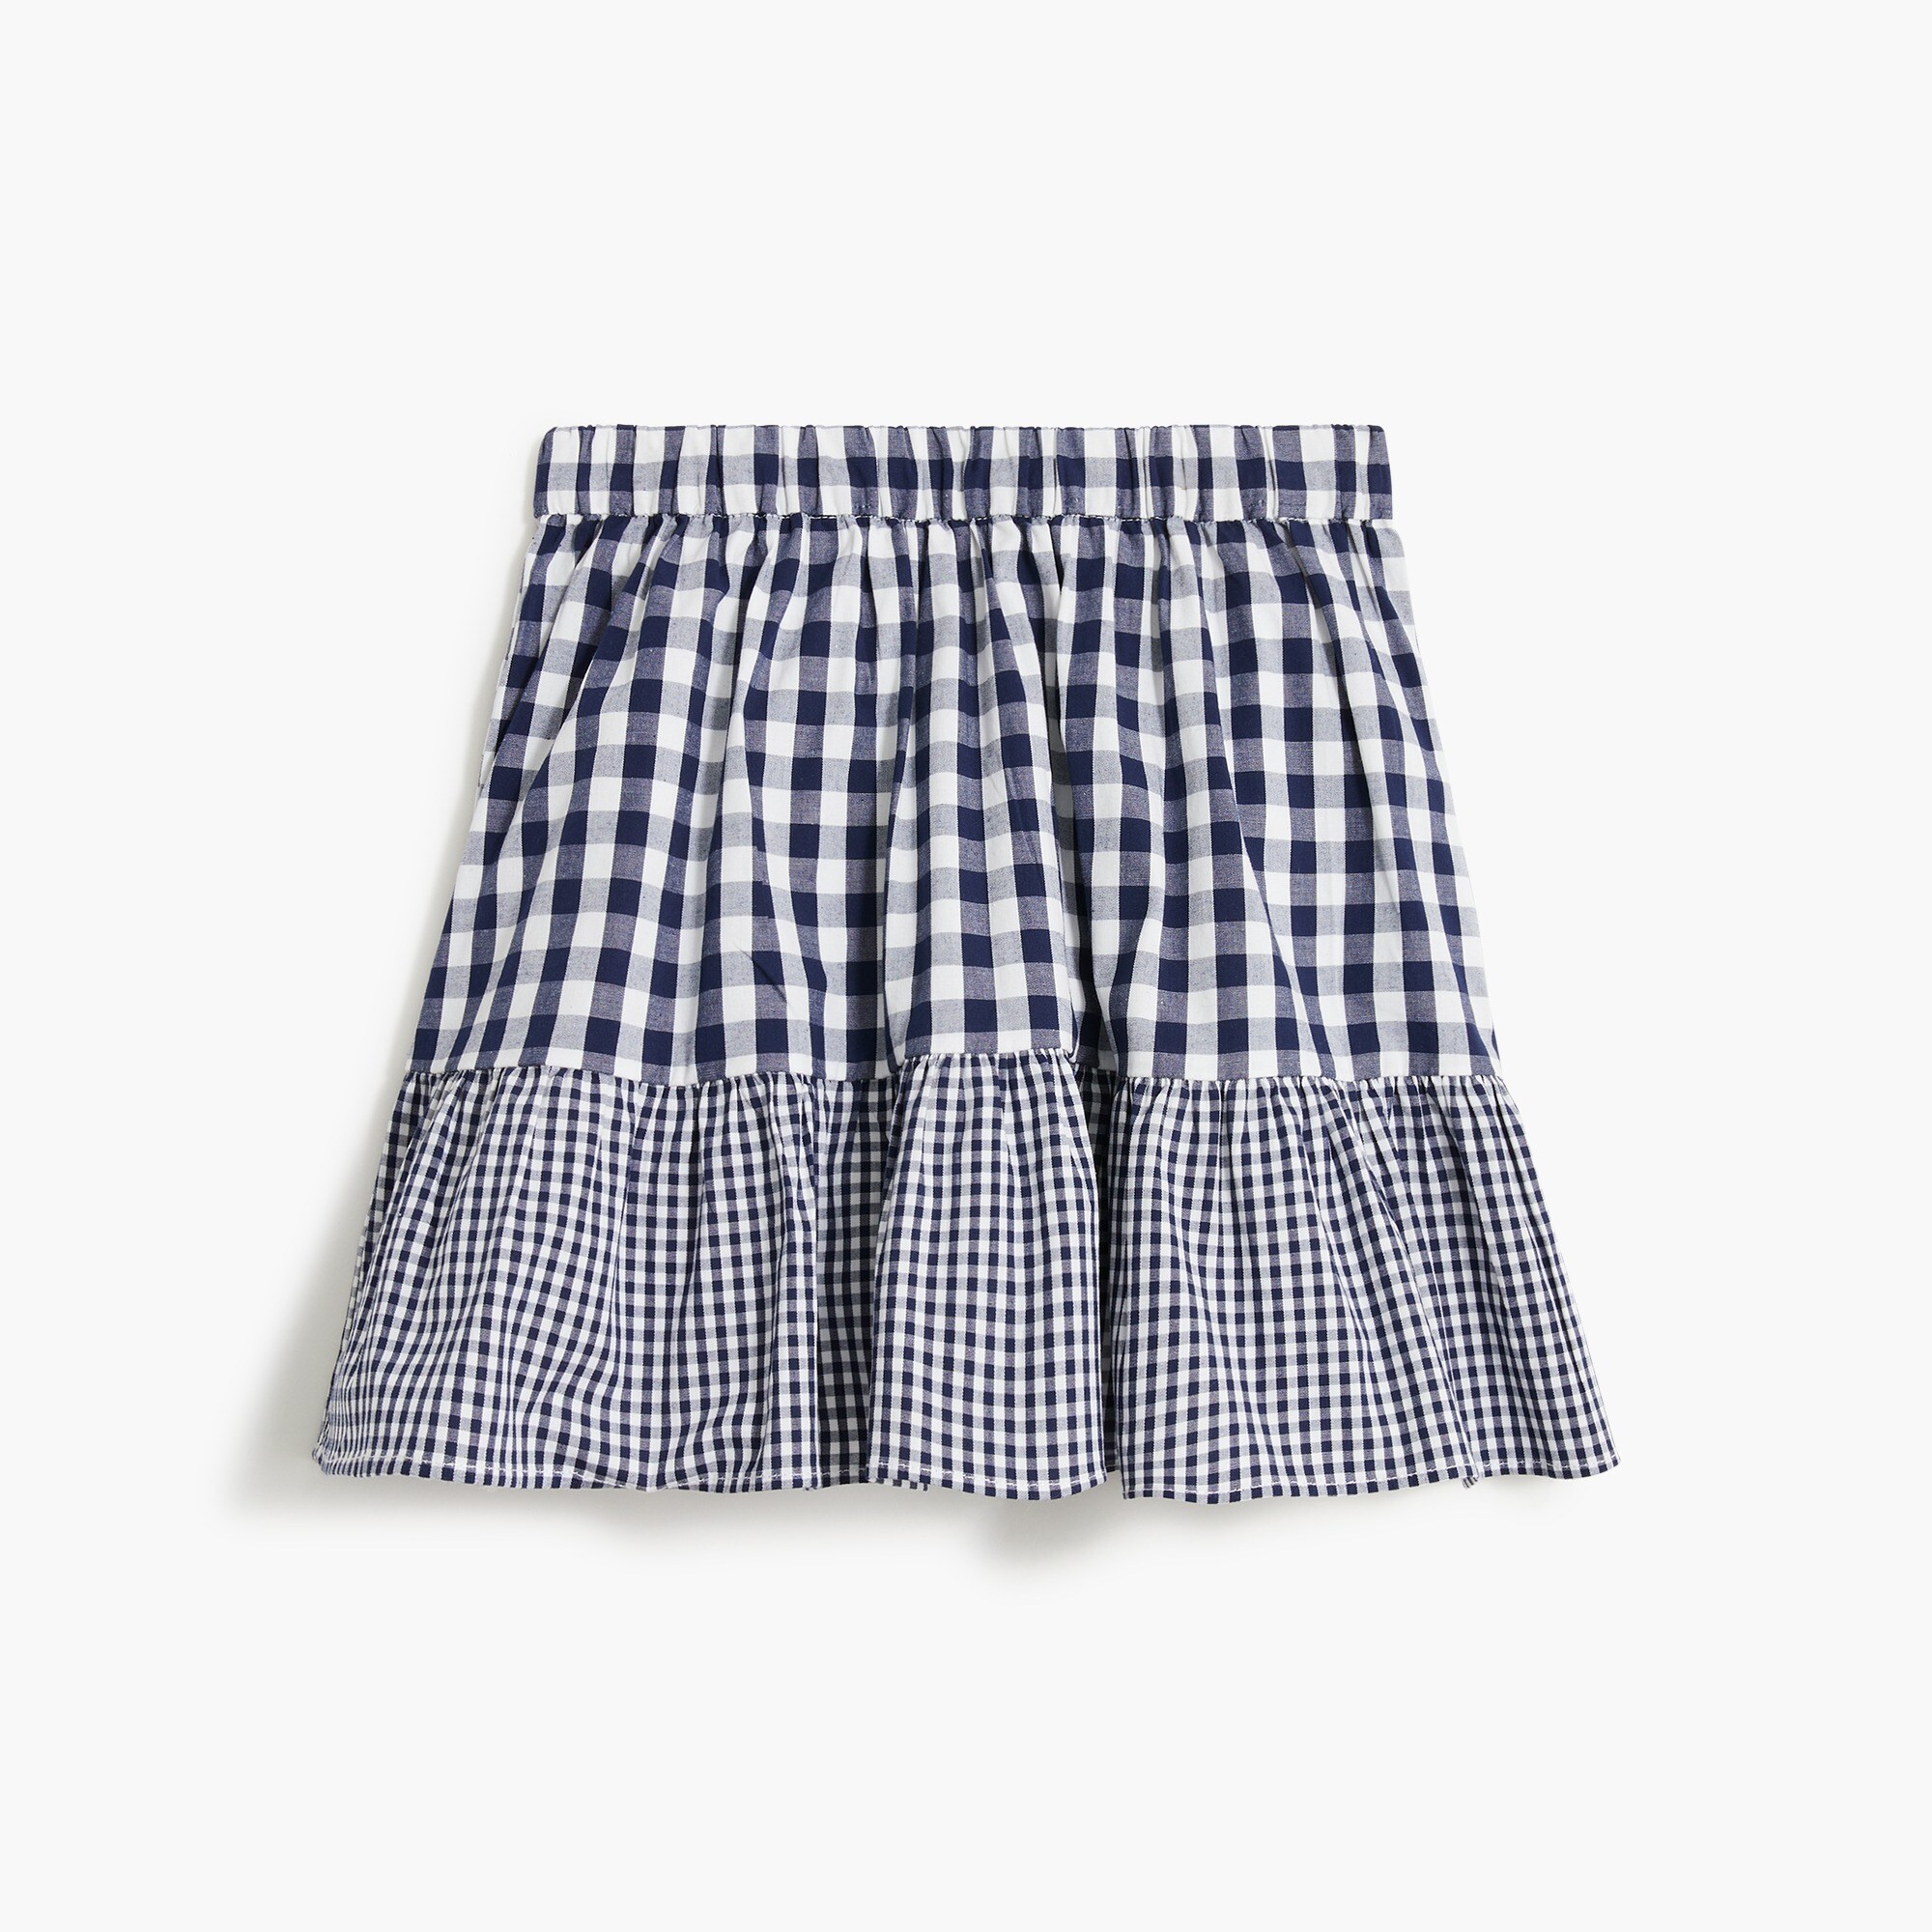  Girls&apos; skirt with ruffle hem